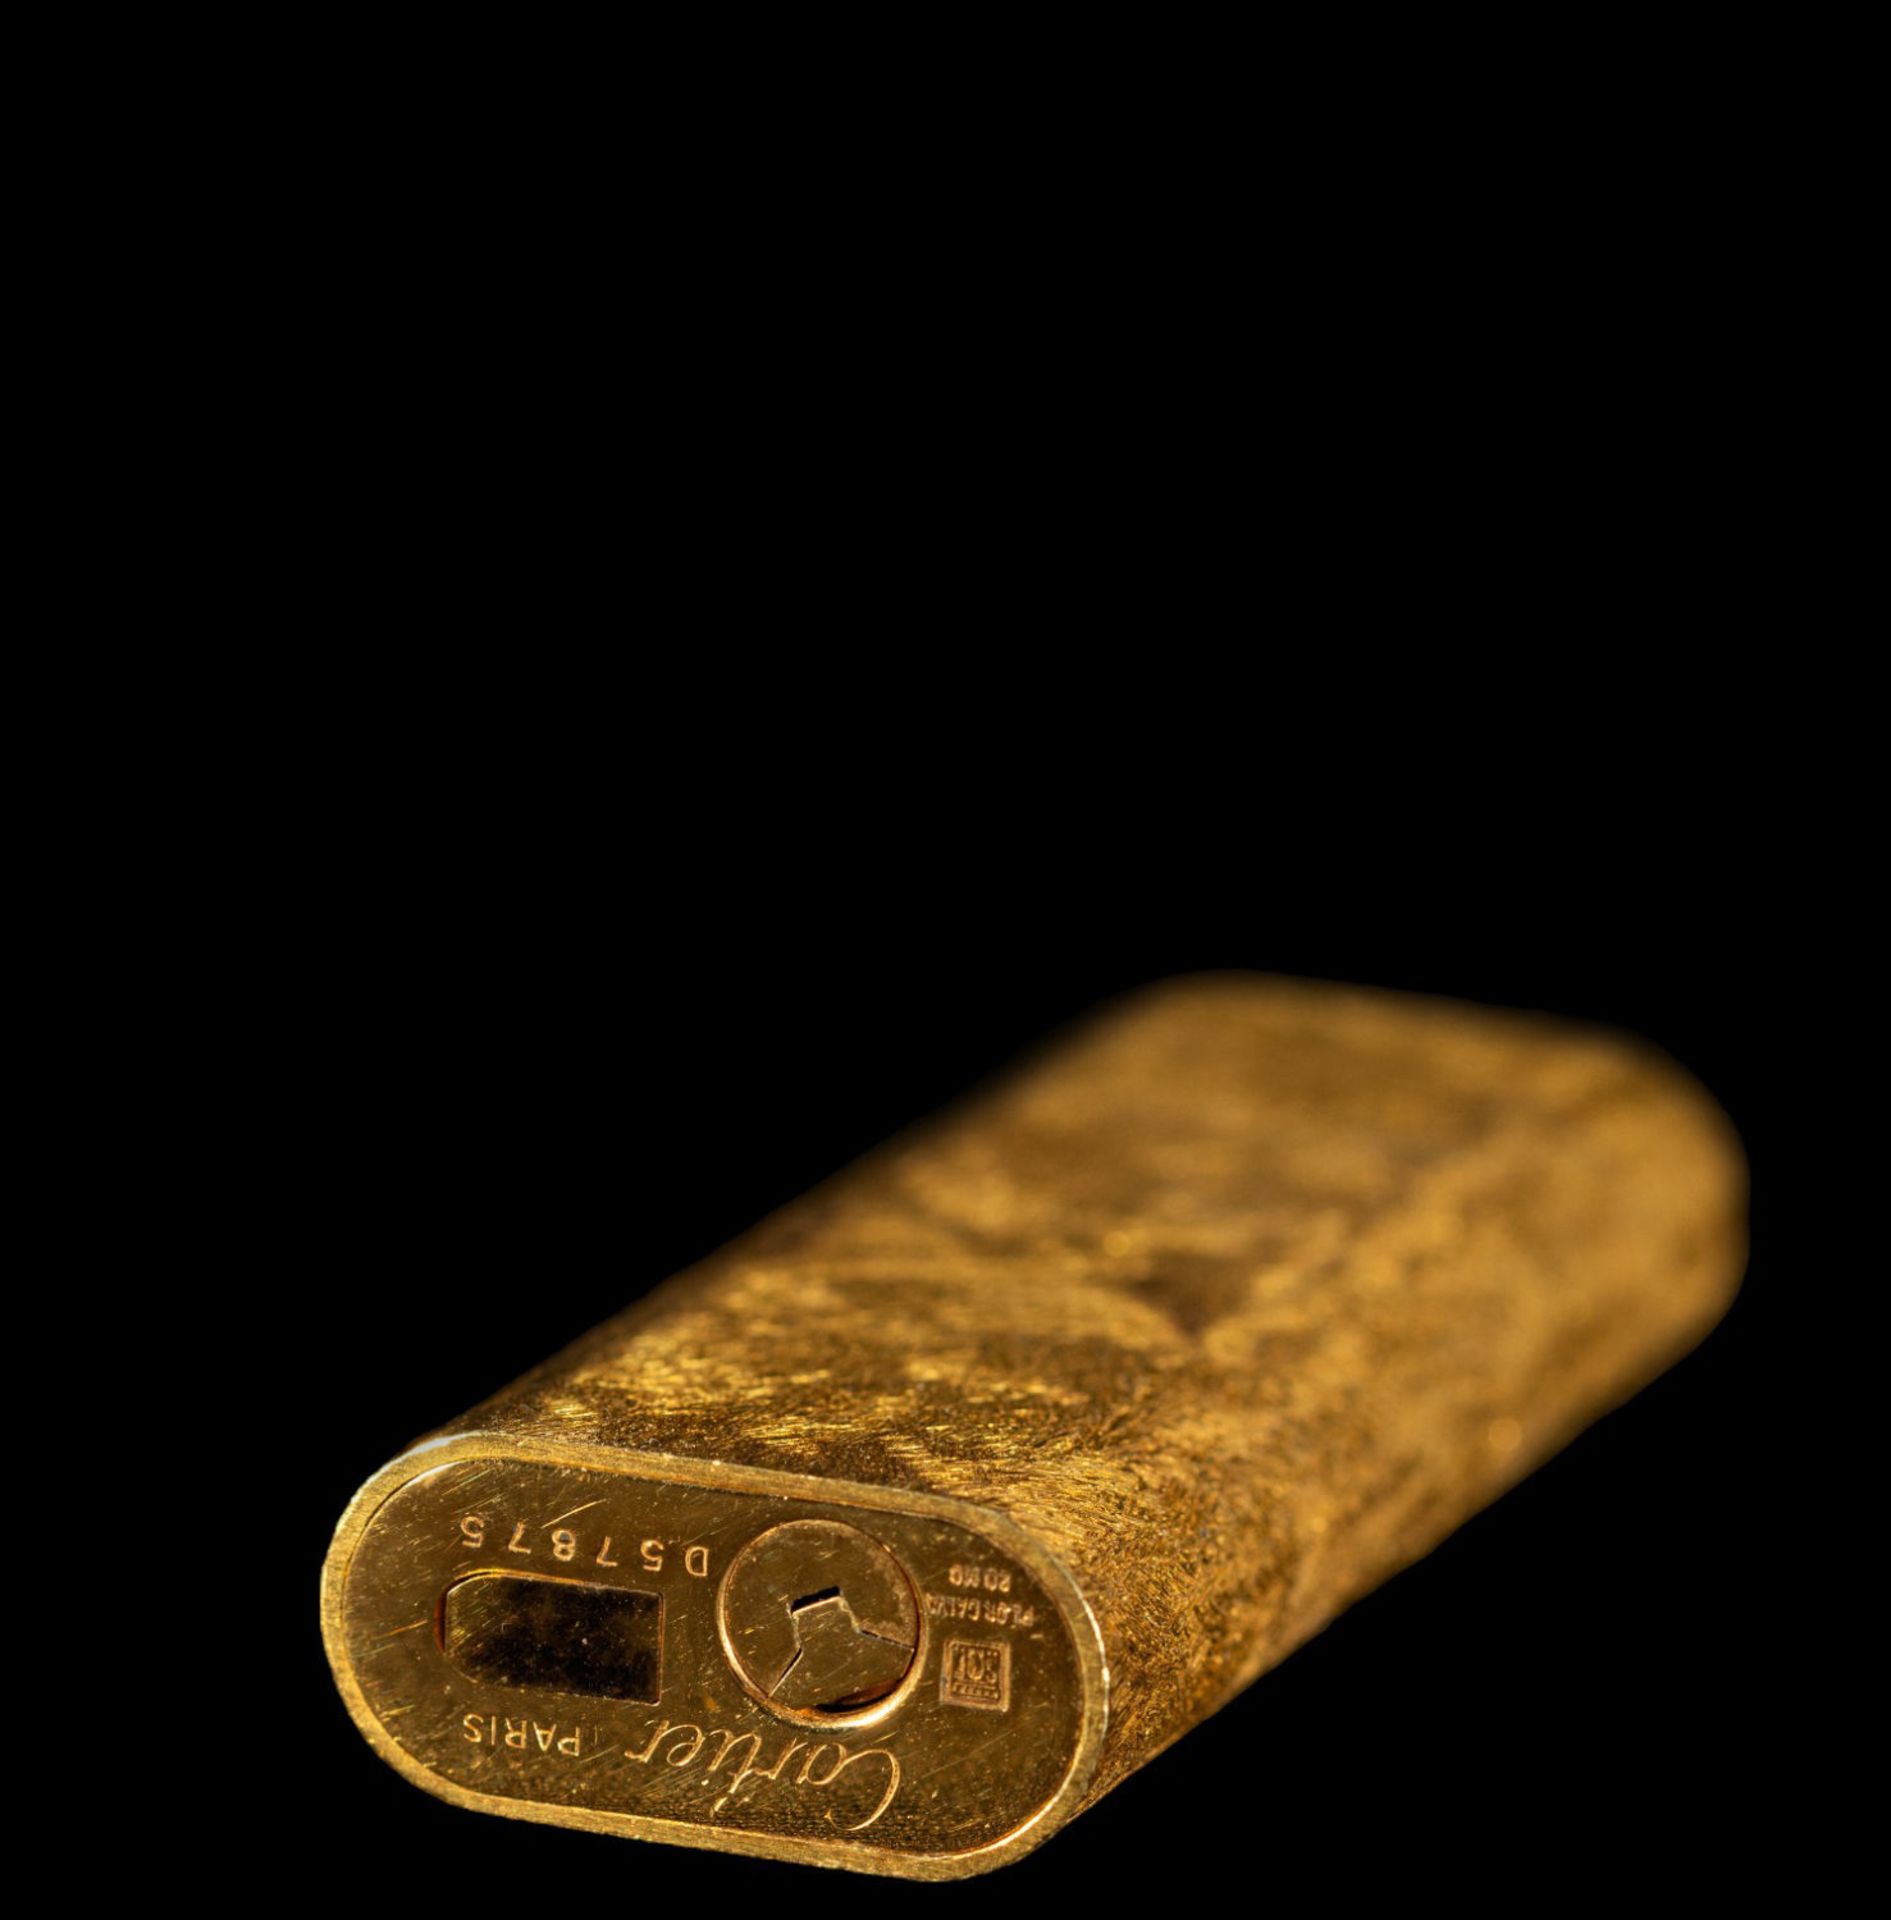 Cartier lighter in 20 micron gold plated, 1970s - Bild 3 aus 3